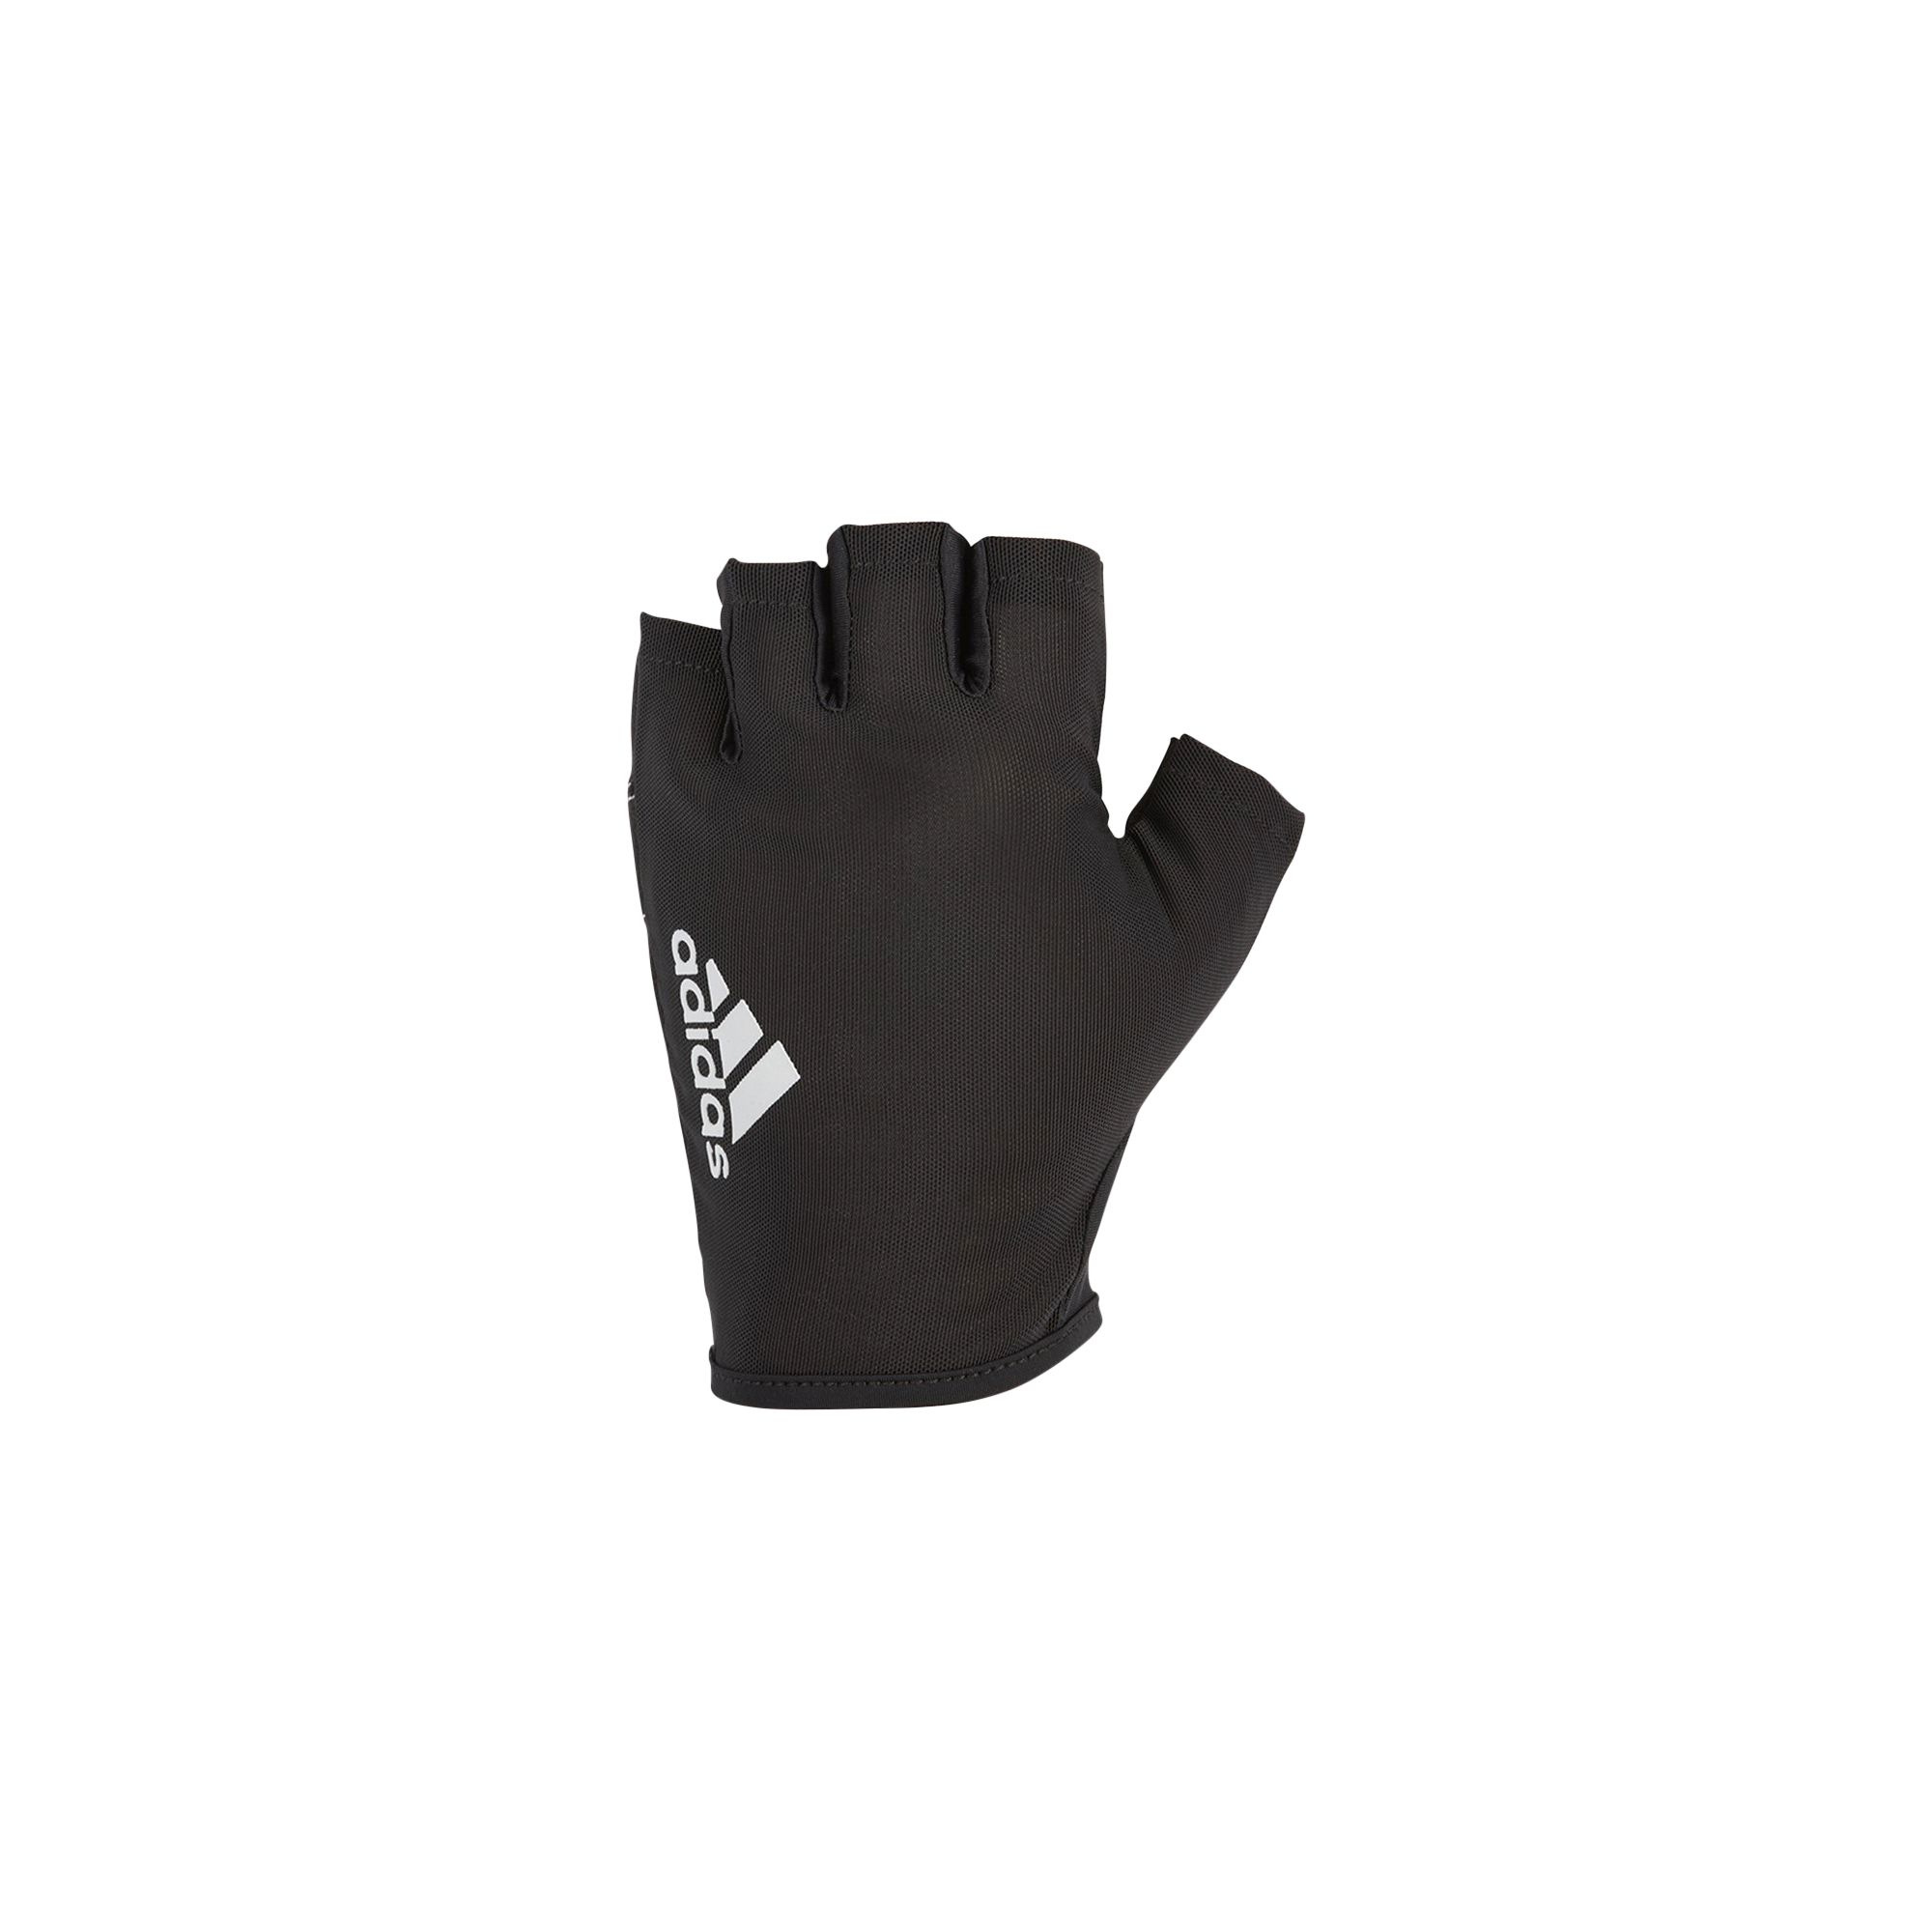 Accesorii Fitness Essential Gloves adidas La reduceri Accesorii